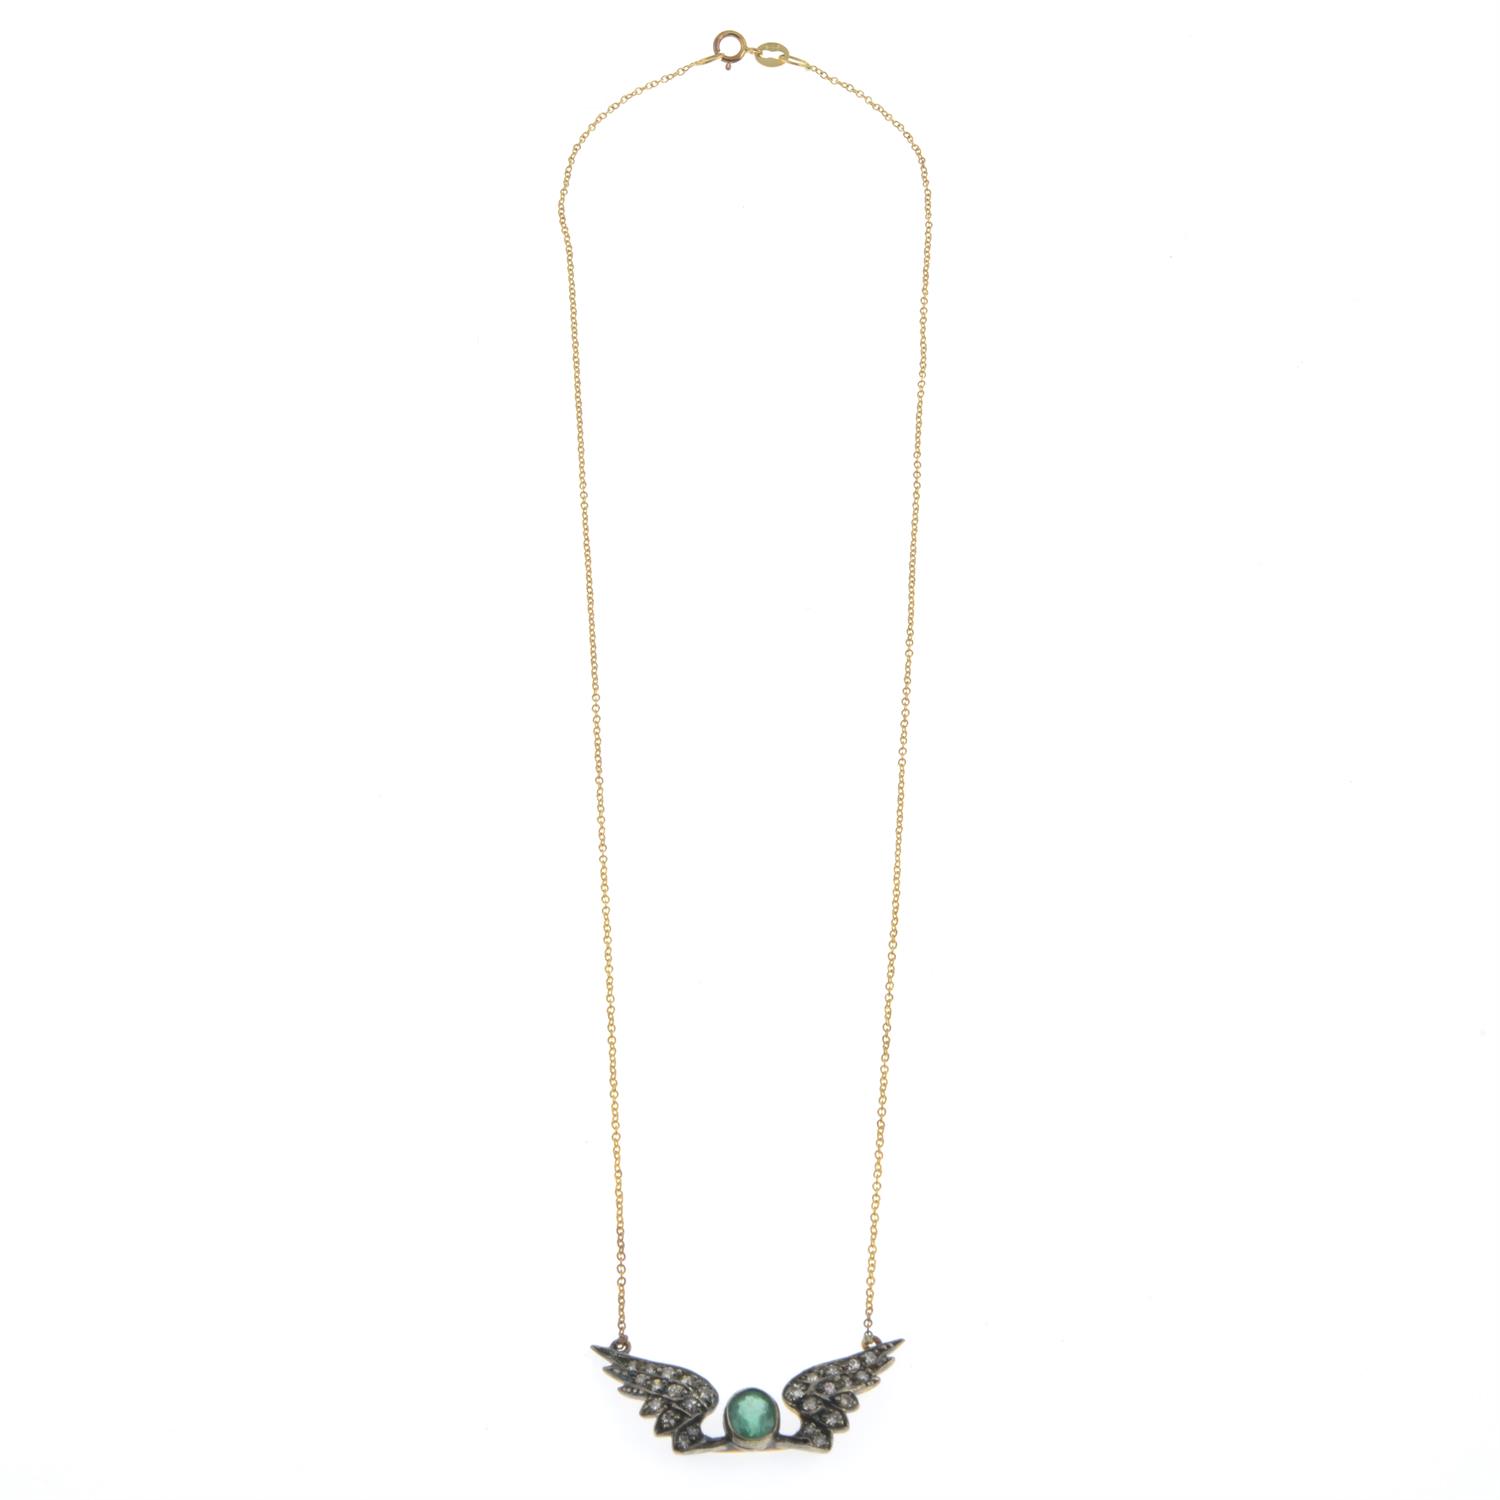 Emerald & diamond pendant, on a chain - Image 2 of 3